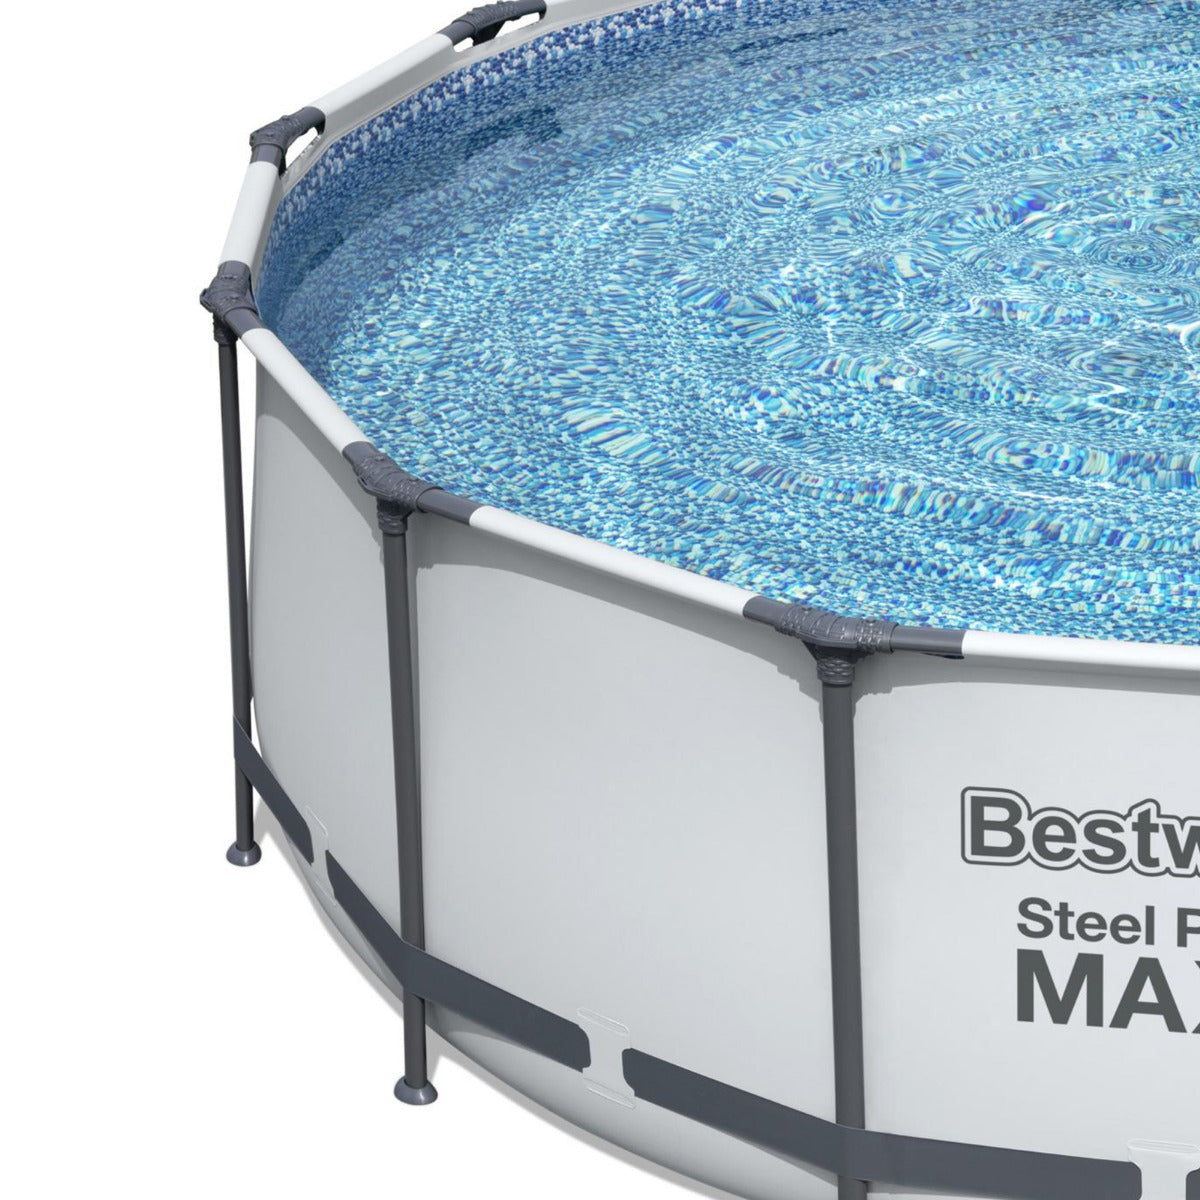 Bestway Steel Pro MAX™ Round Above Ground Swimming Pool Kit - 4.57m x 1.22m